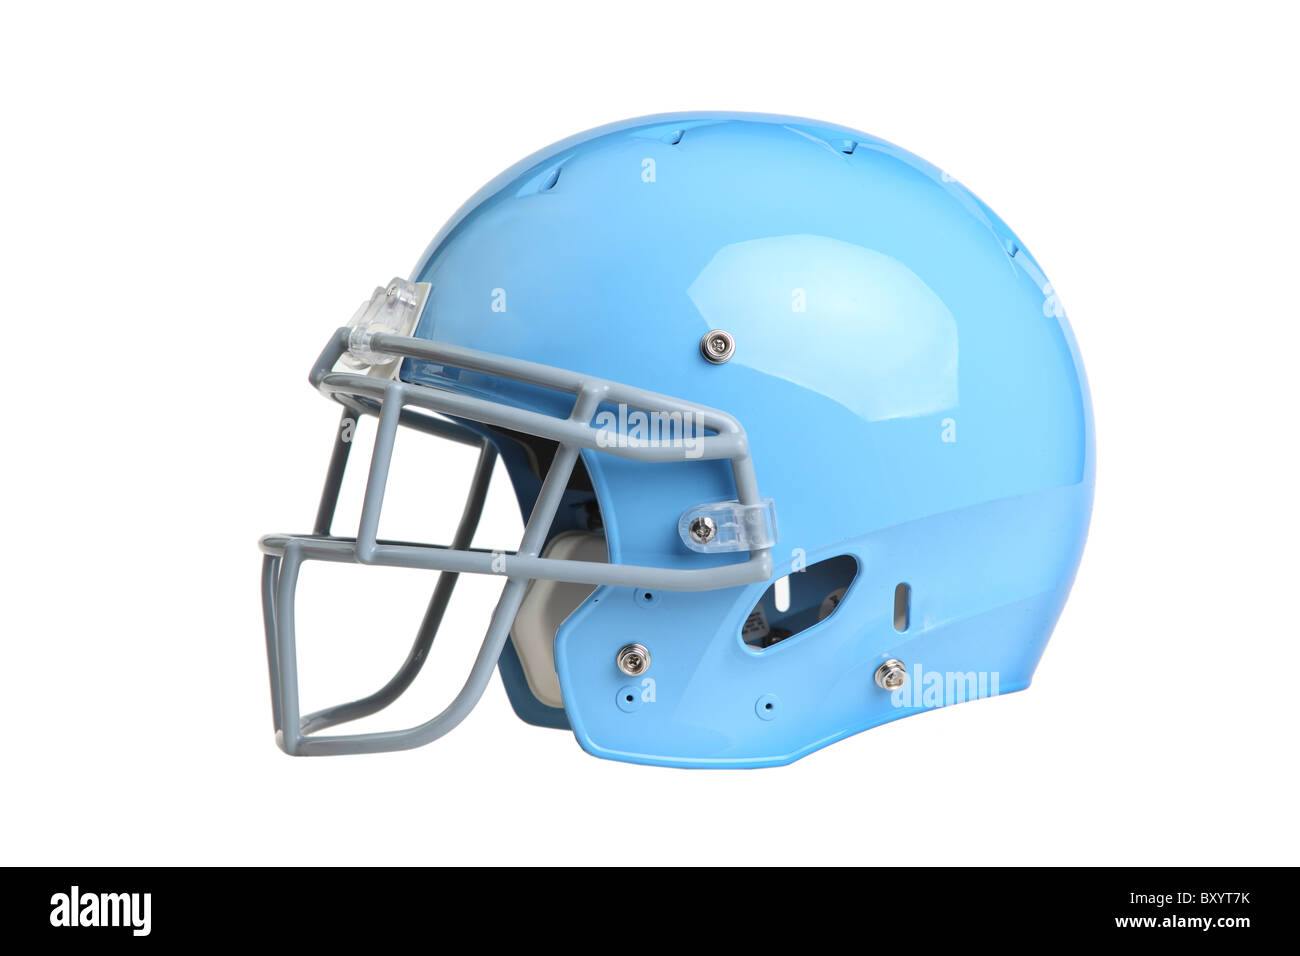 Football helmet on white background Stock Photo